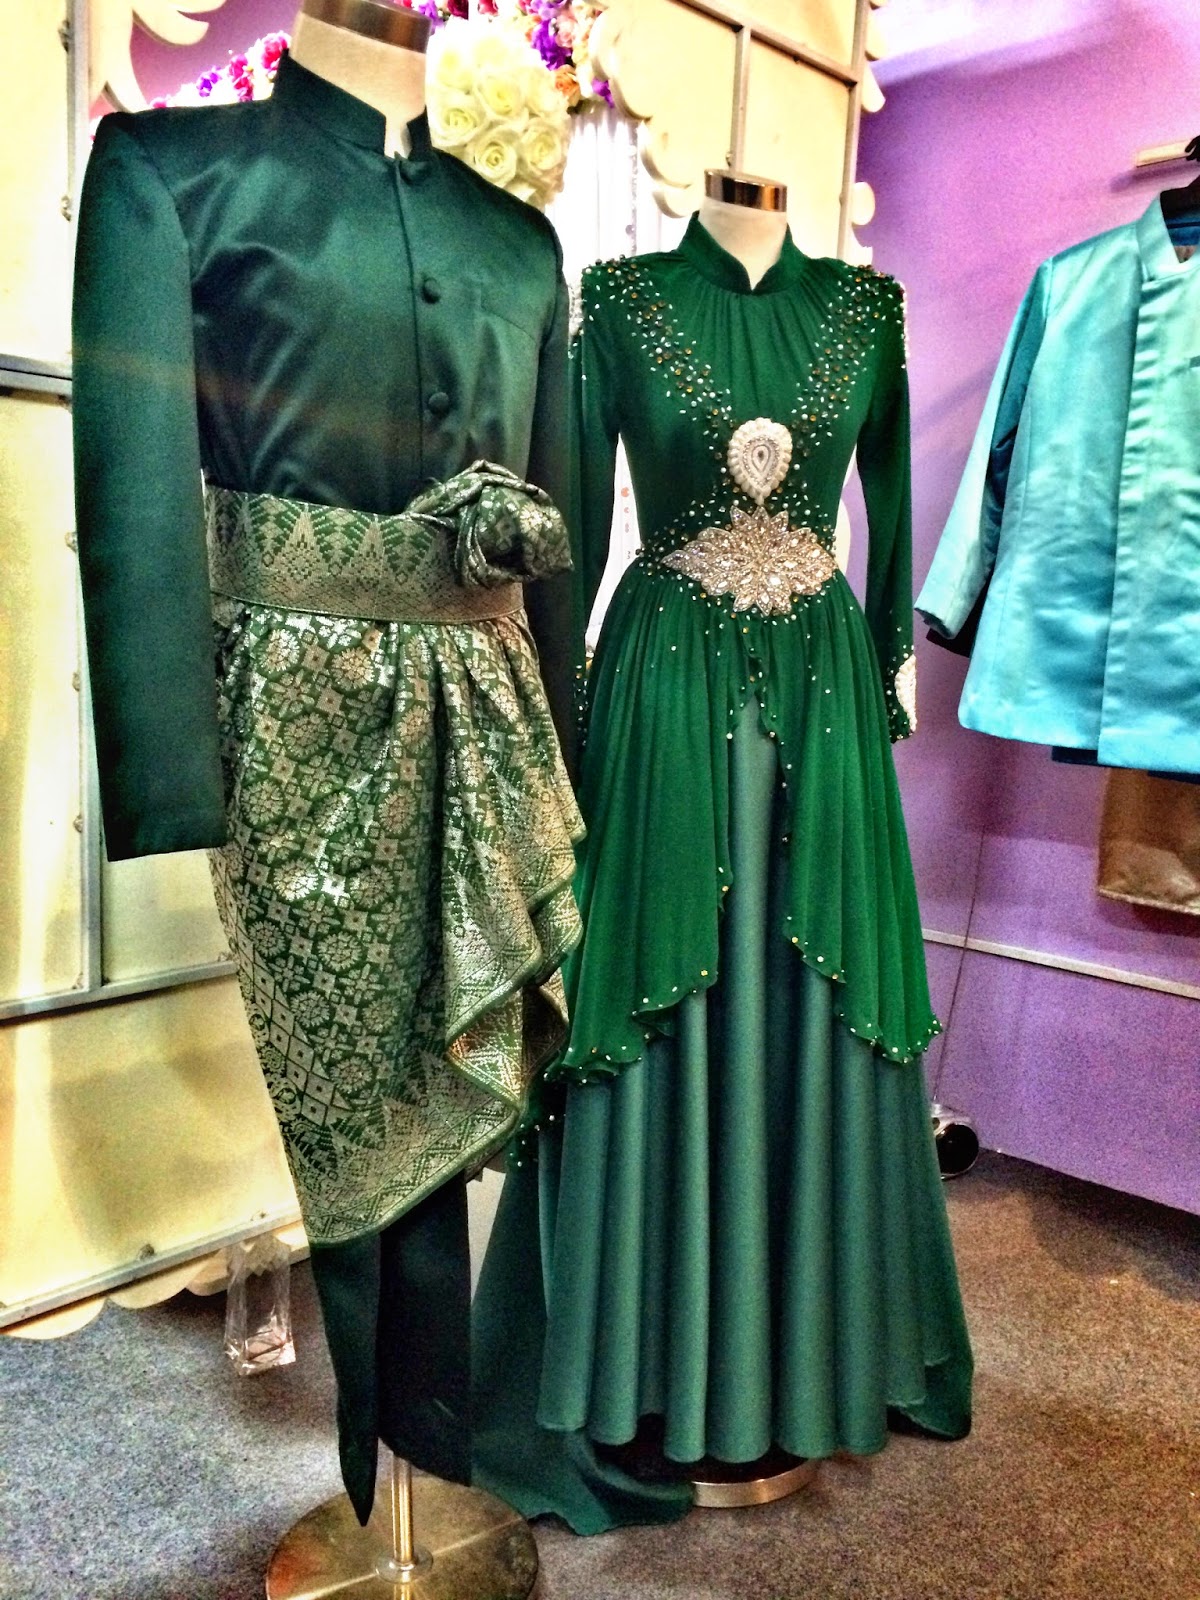  Baju  Pengantin  Warna Hijau  Emerald  Inspirasi Pernikahan